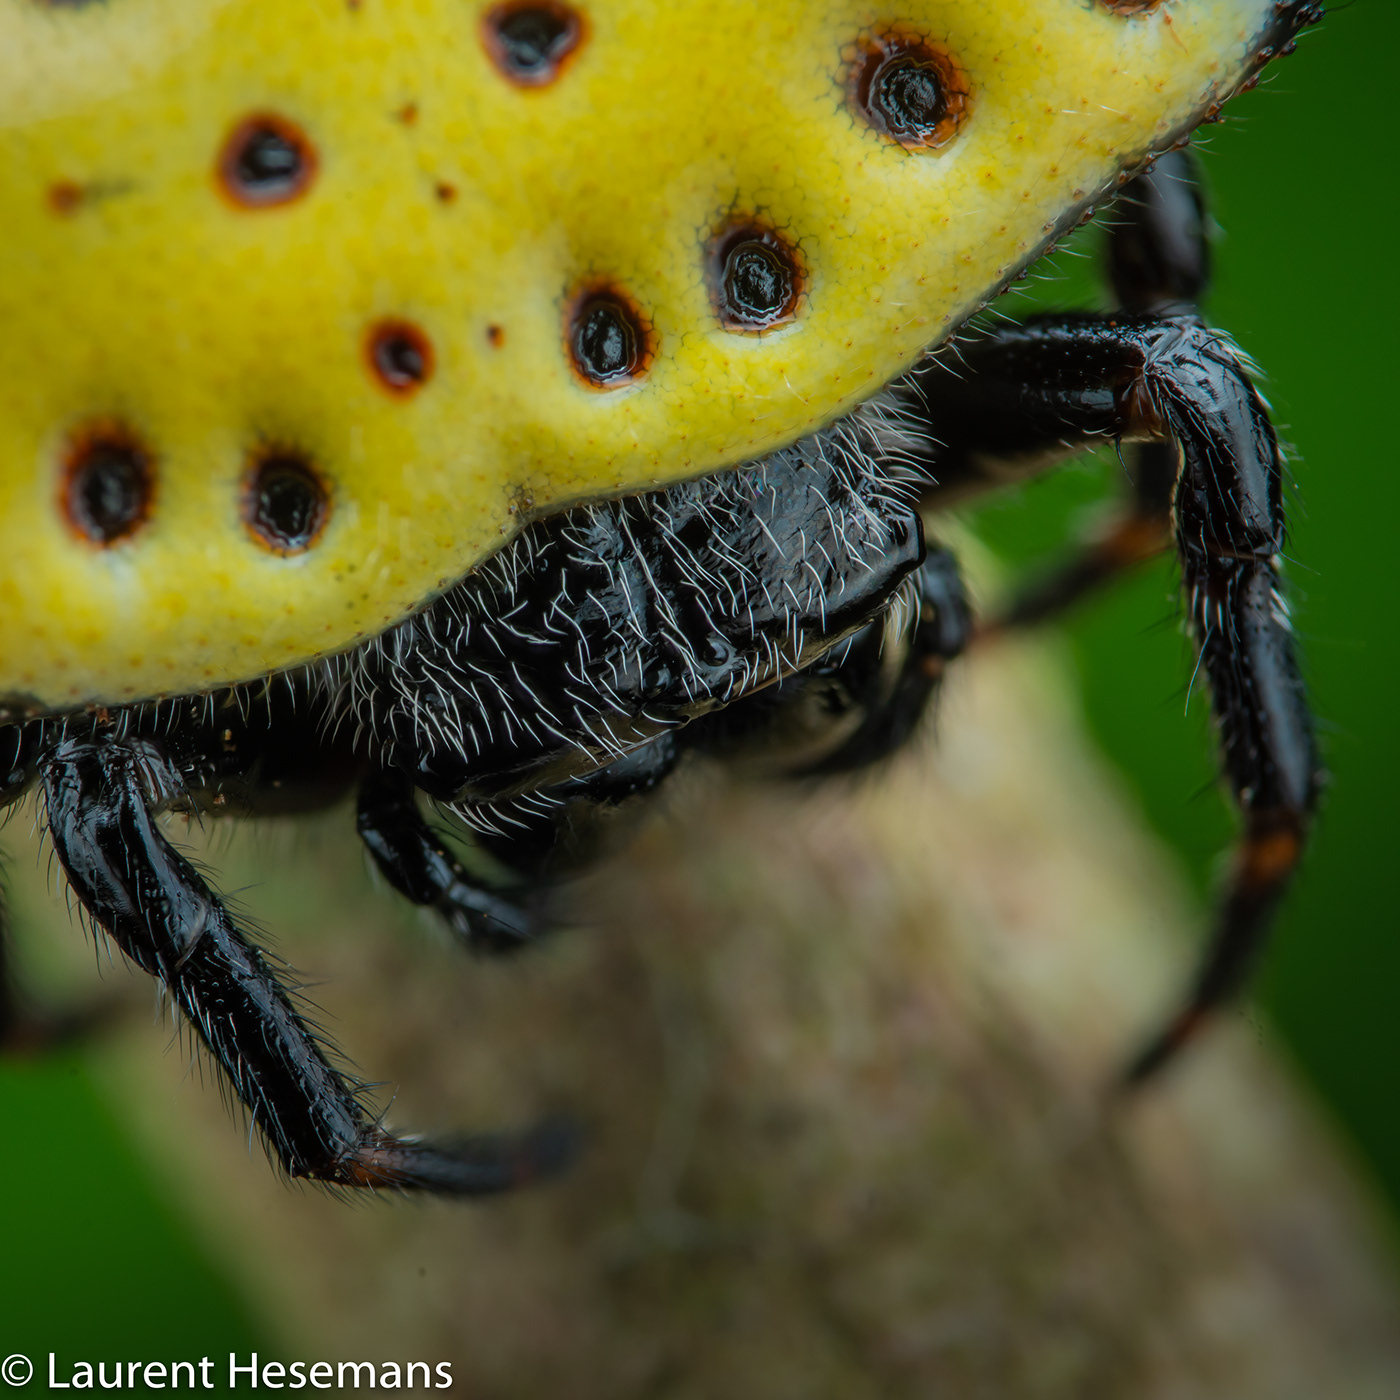 animals arachnids arthropods Costa Rica focus stacking macro Macro Photography spiders wildlife